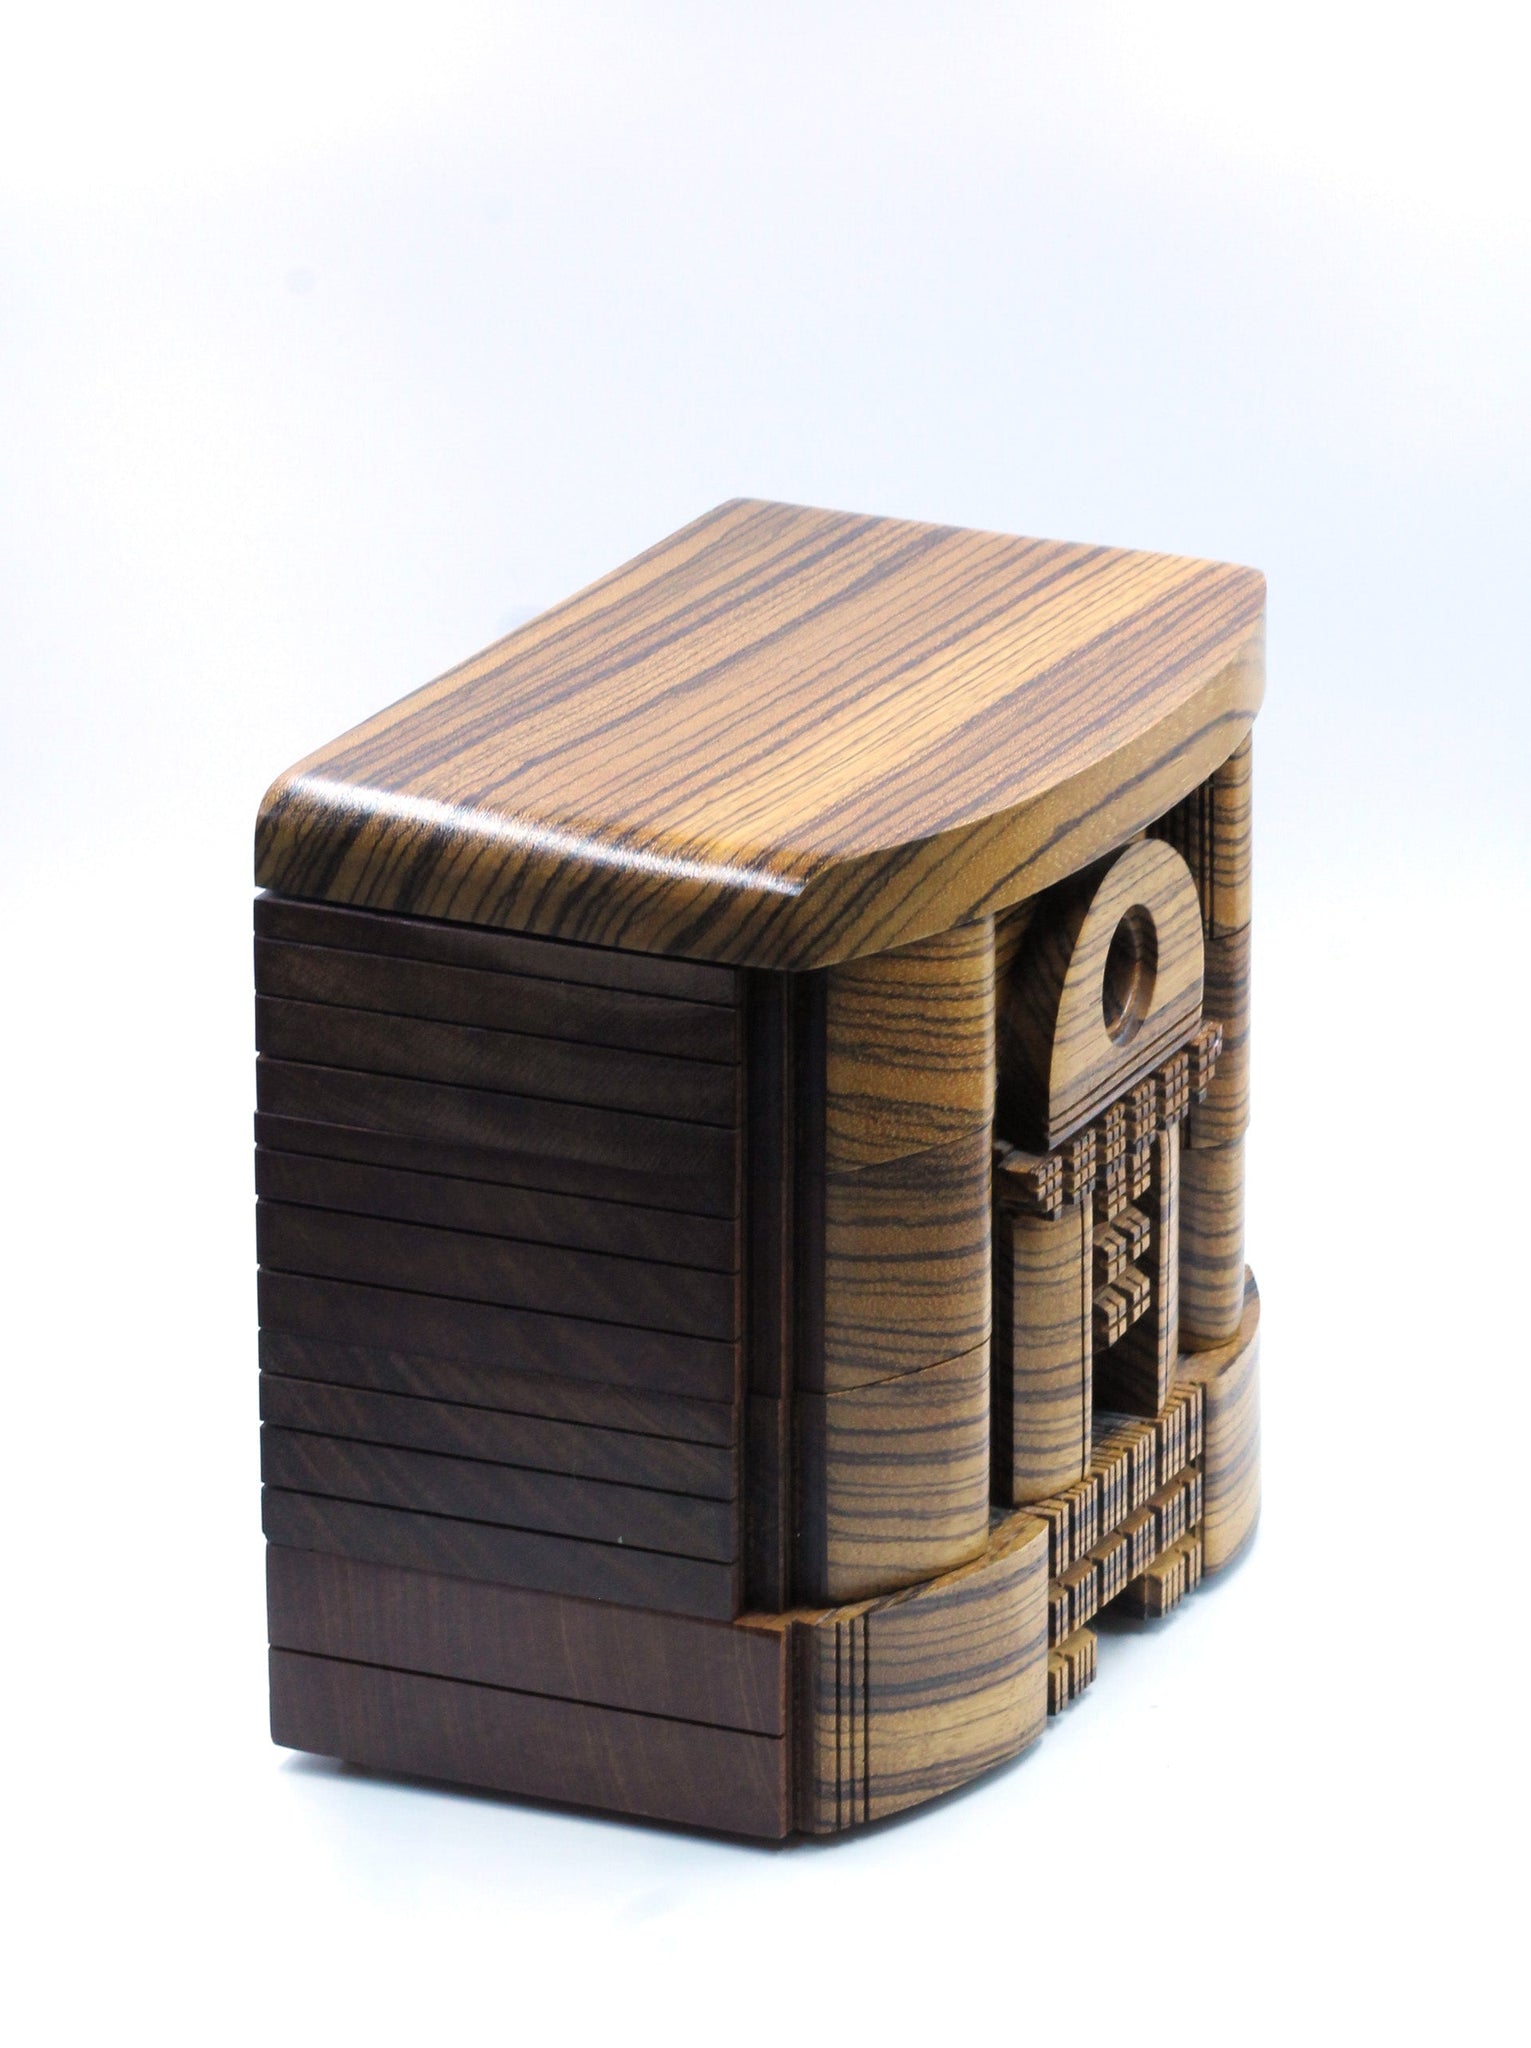 Vintage Handmade Zebra Wood Box with Hidden Drawers,SOLD